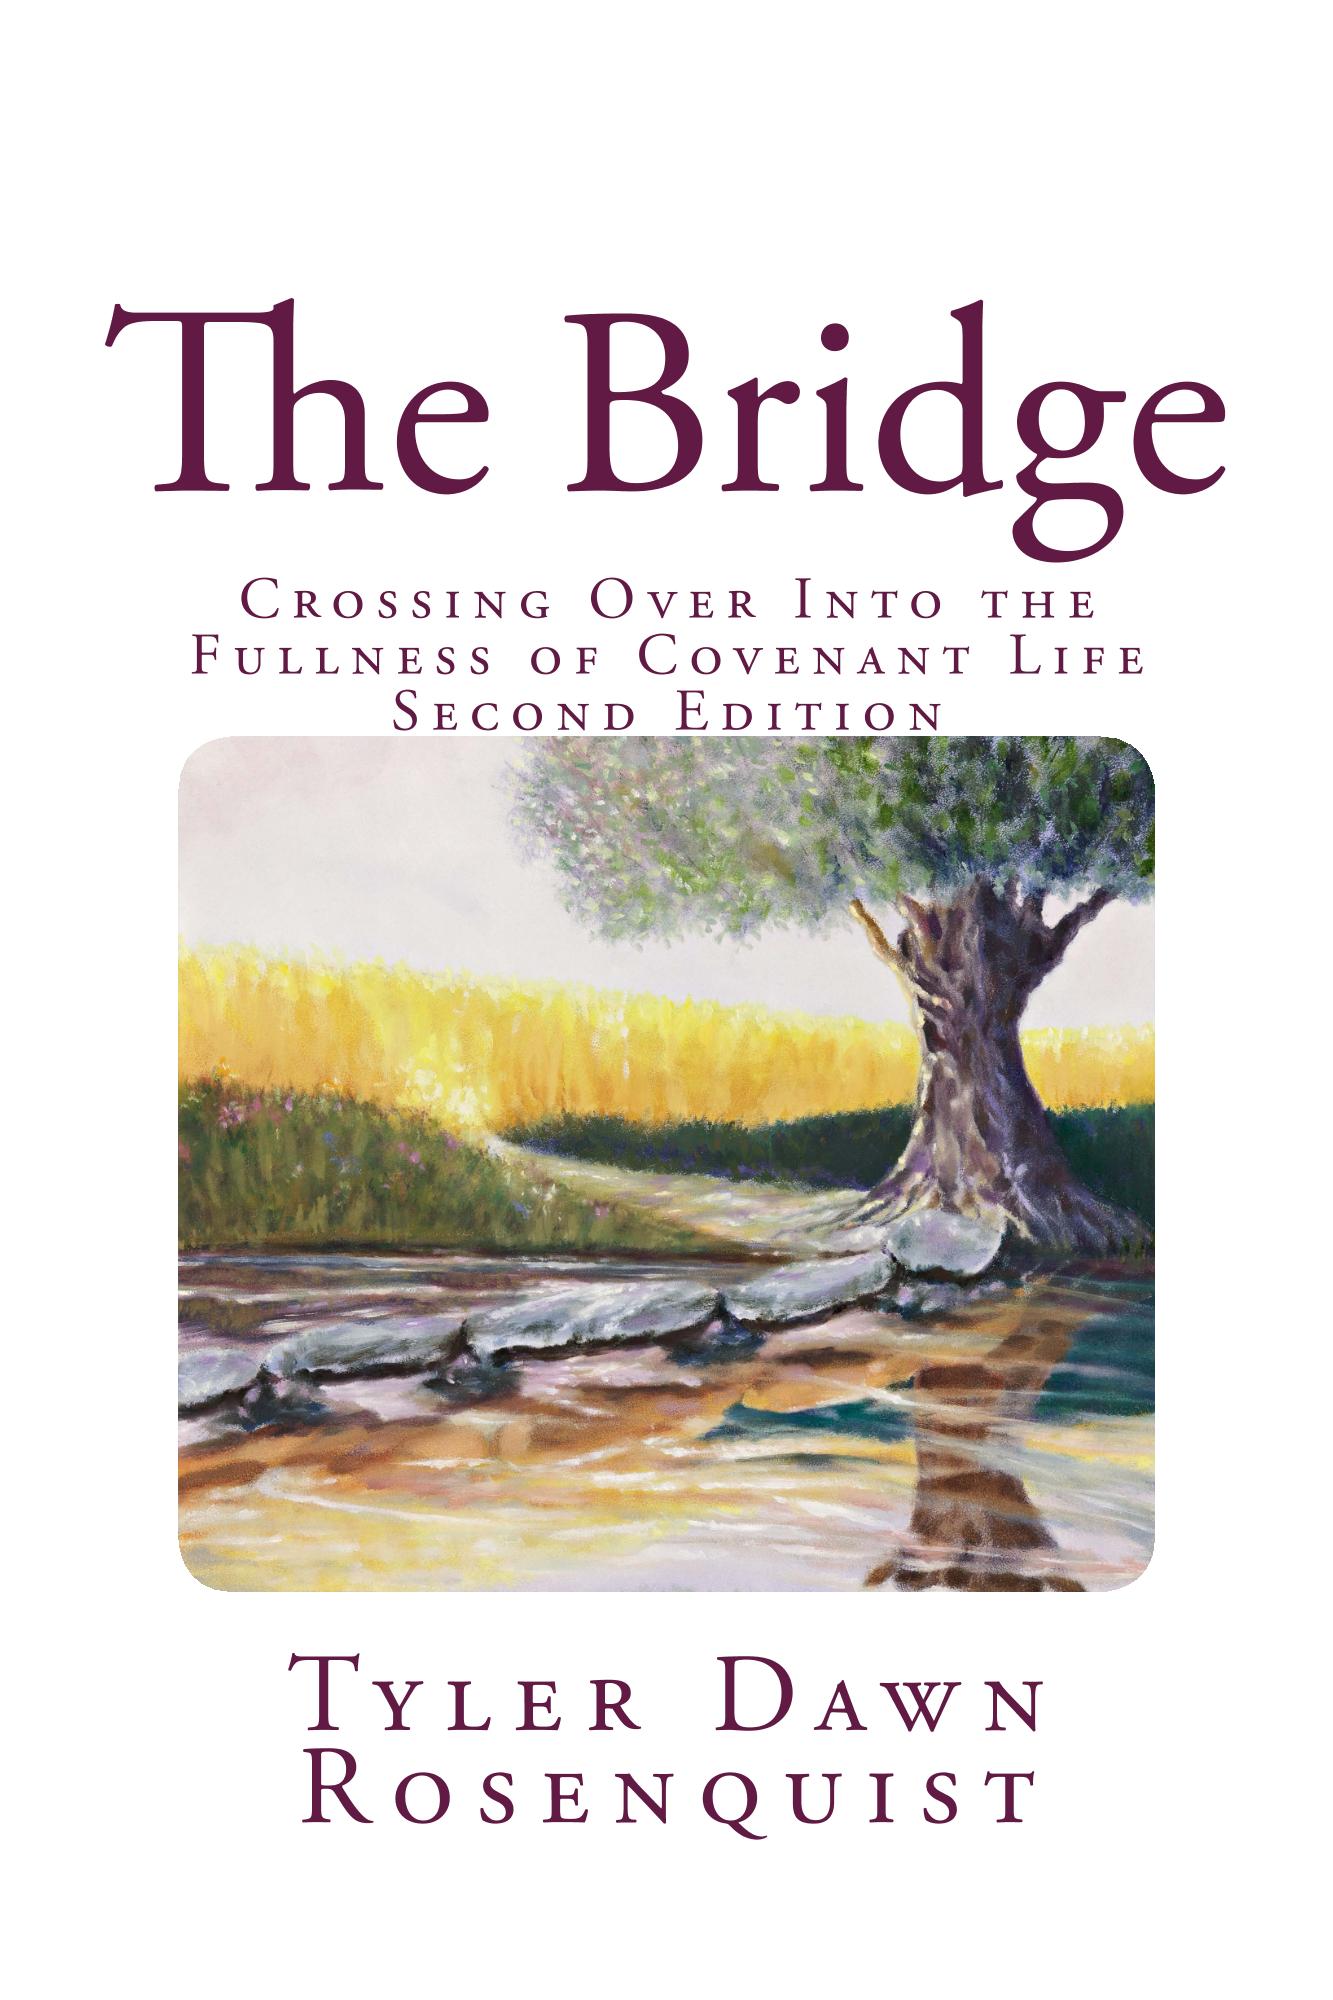 The Bridge, 2nd Edition available on Amazon